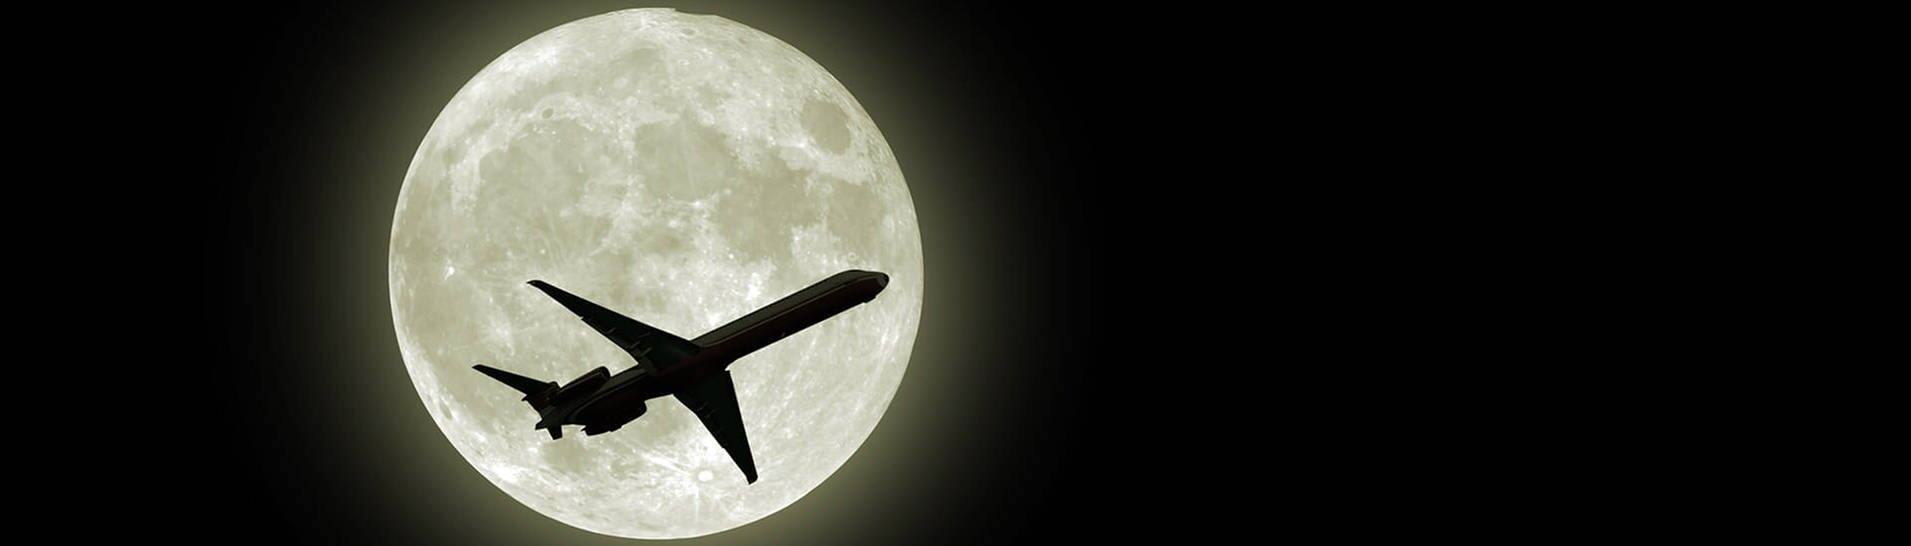 Flugzeug fliegt vor dem Mond (Foto: AdobeStock / photoncatcher36)